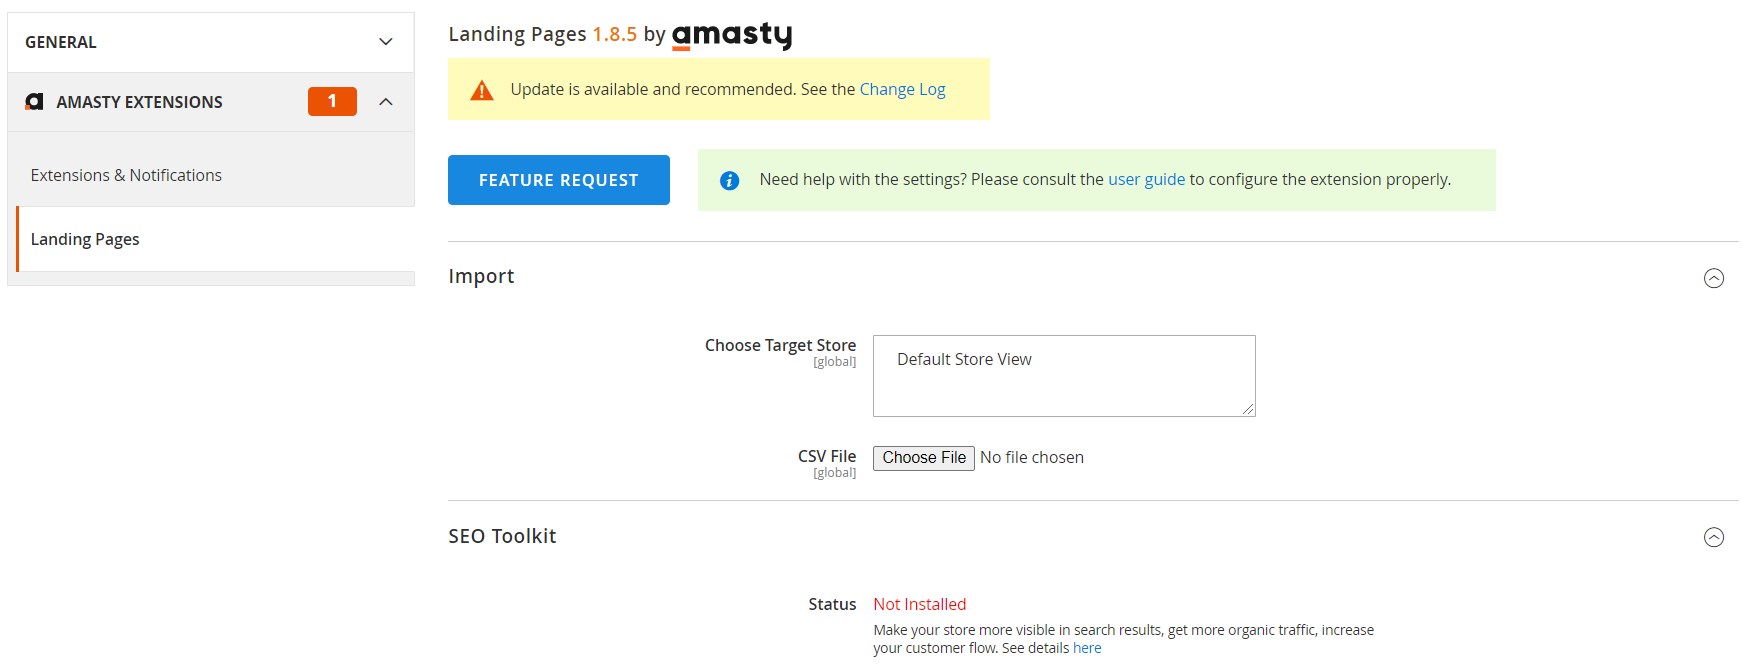 Magento 2 Amasty Landing Pages configuration settings